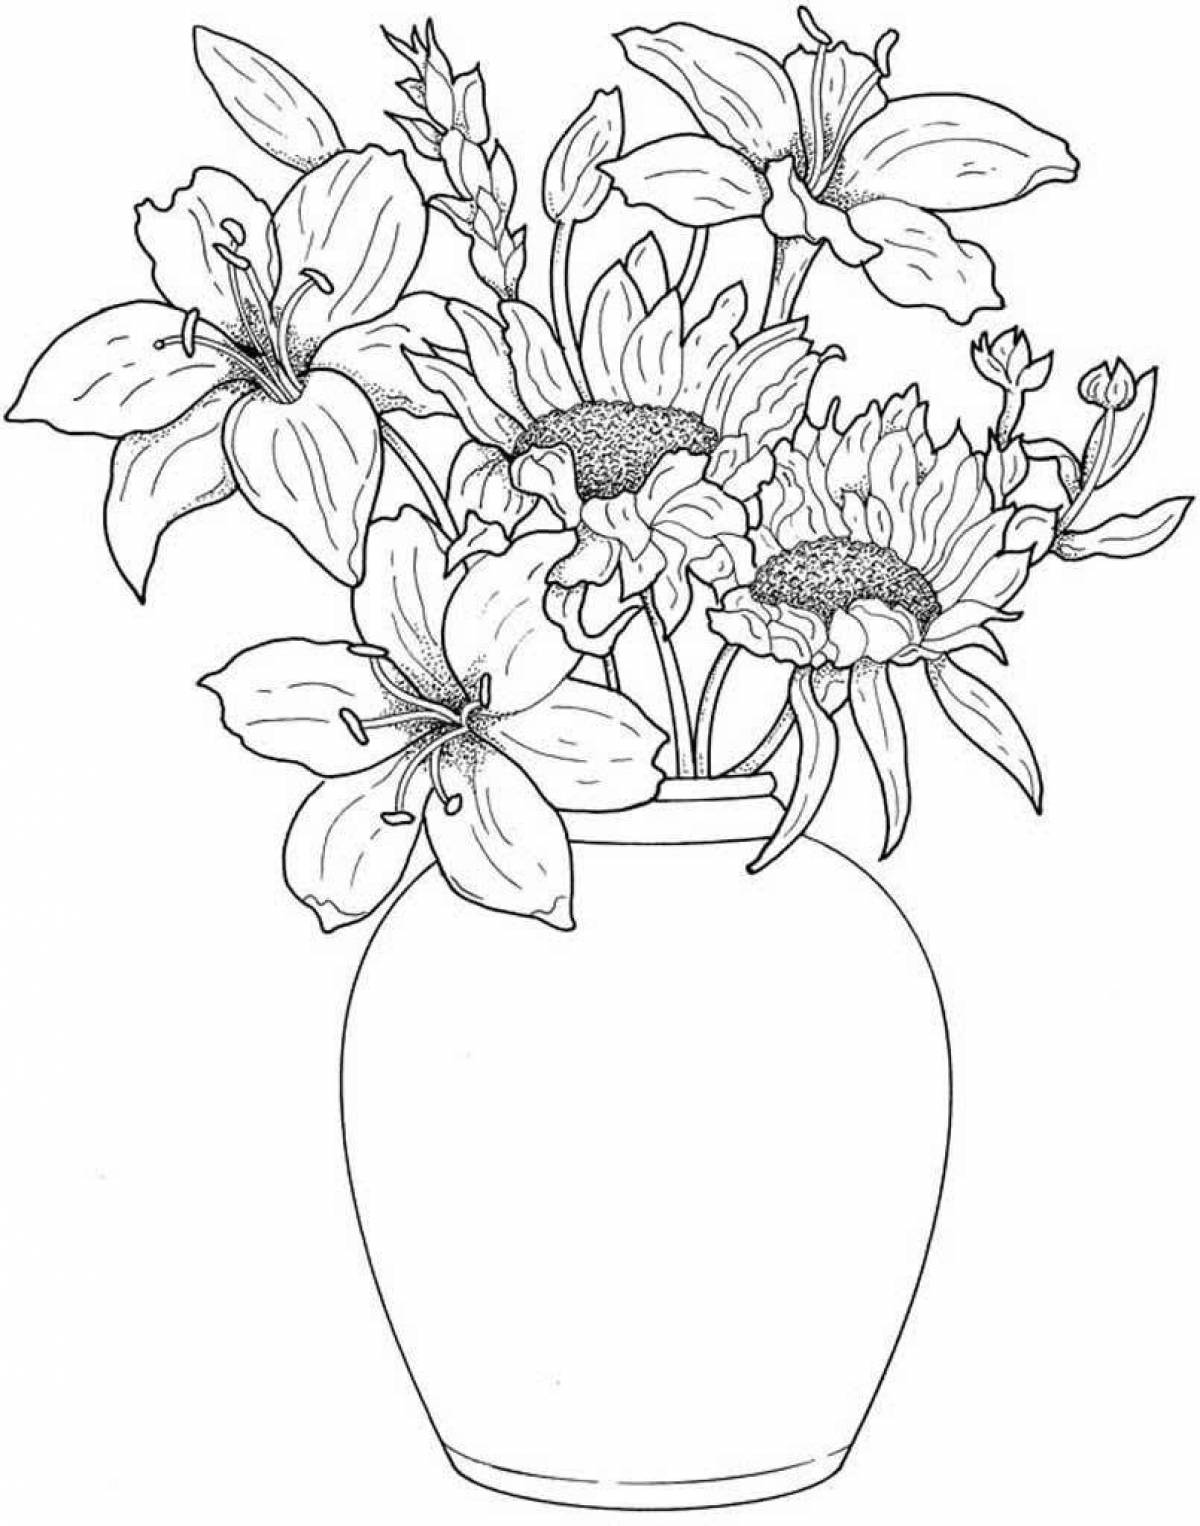 Adorable flower vase for children 8-9 years old